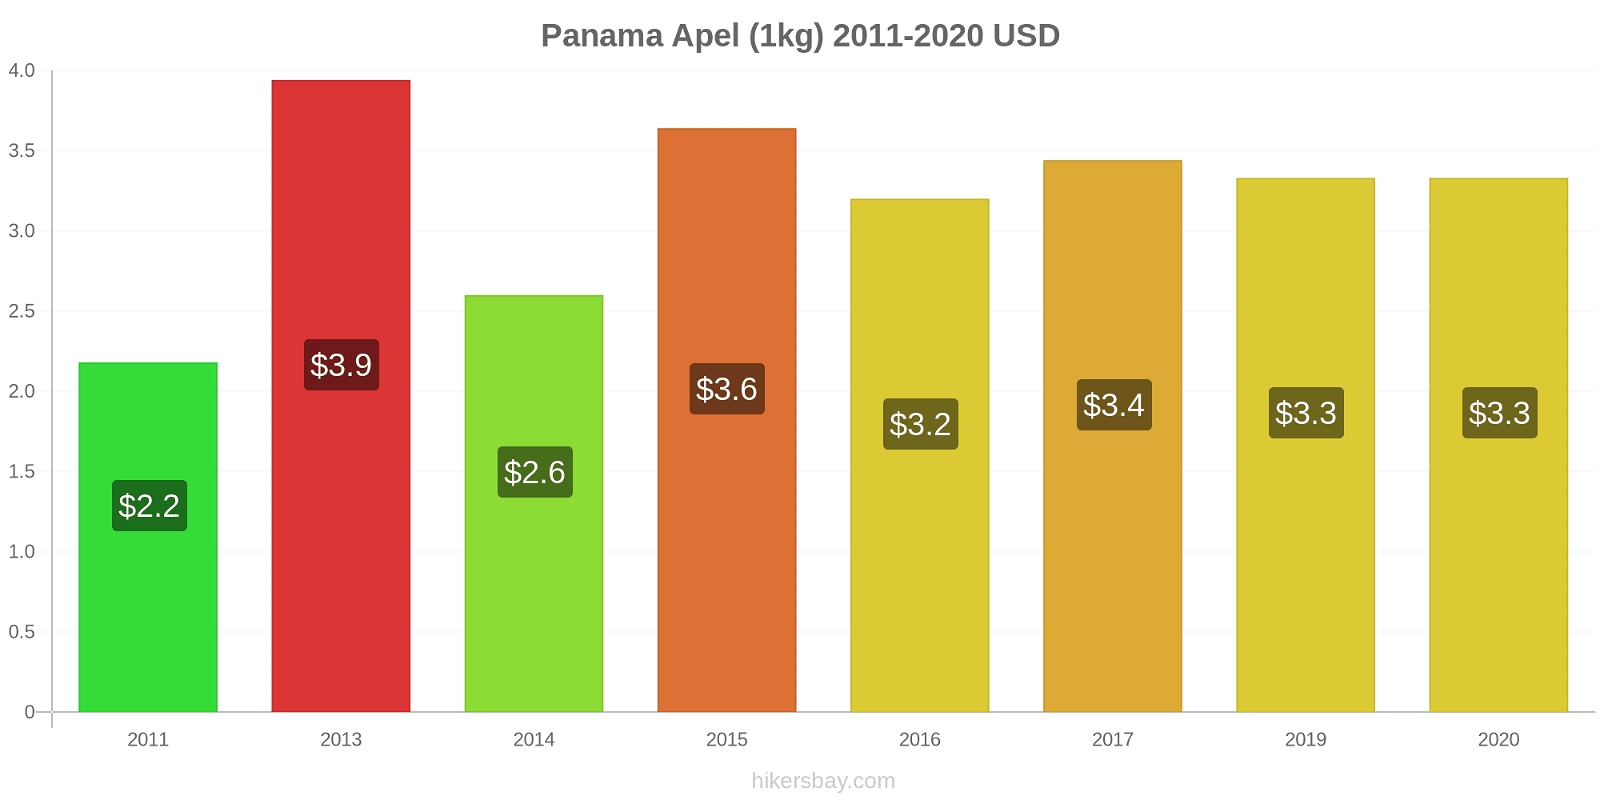 Panama perubahan harga Apel (1kg) hikersbay.com